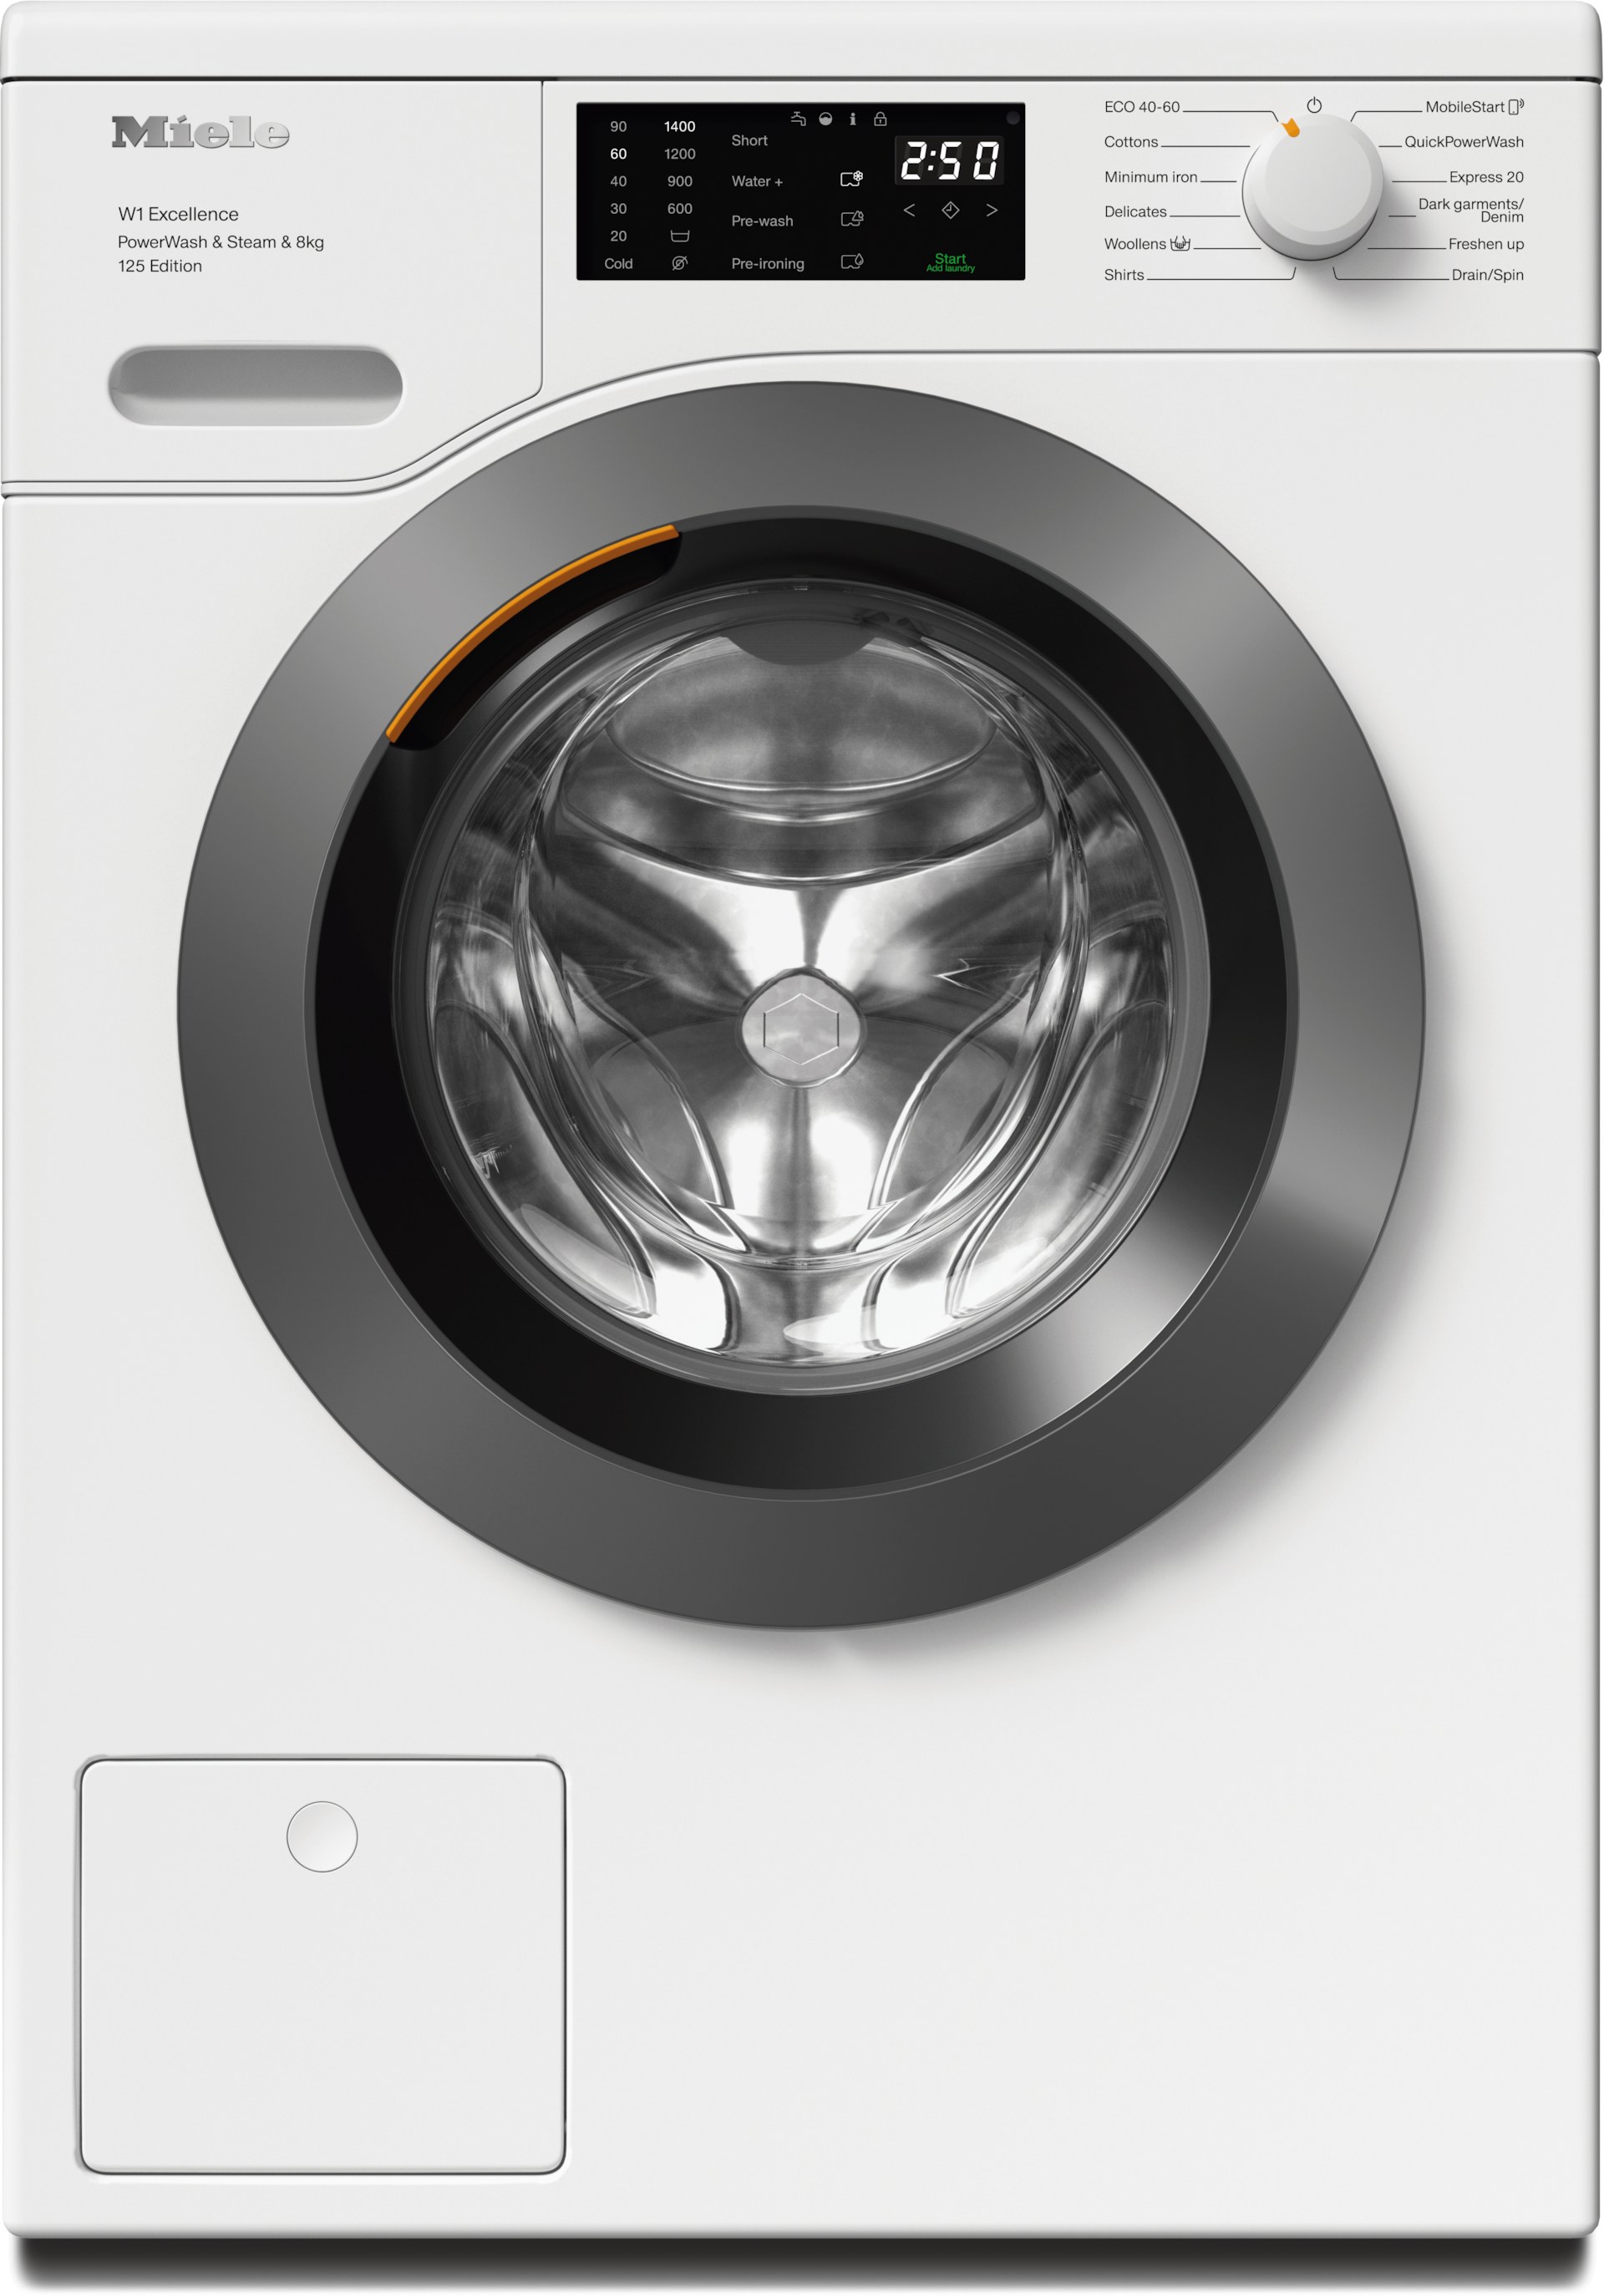 Washing machines - WEB385 WCS 125 Edition - 1